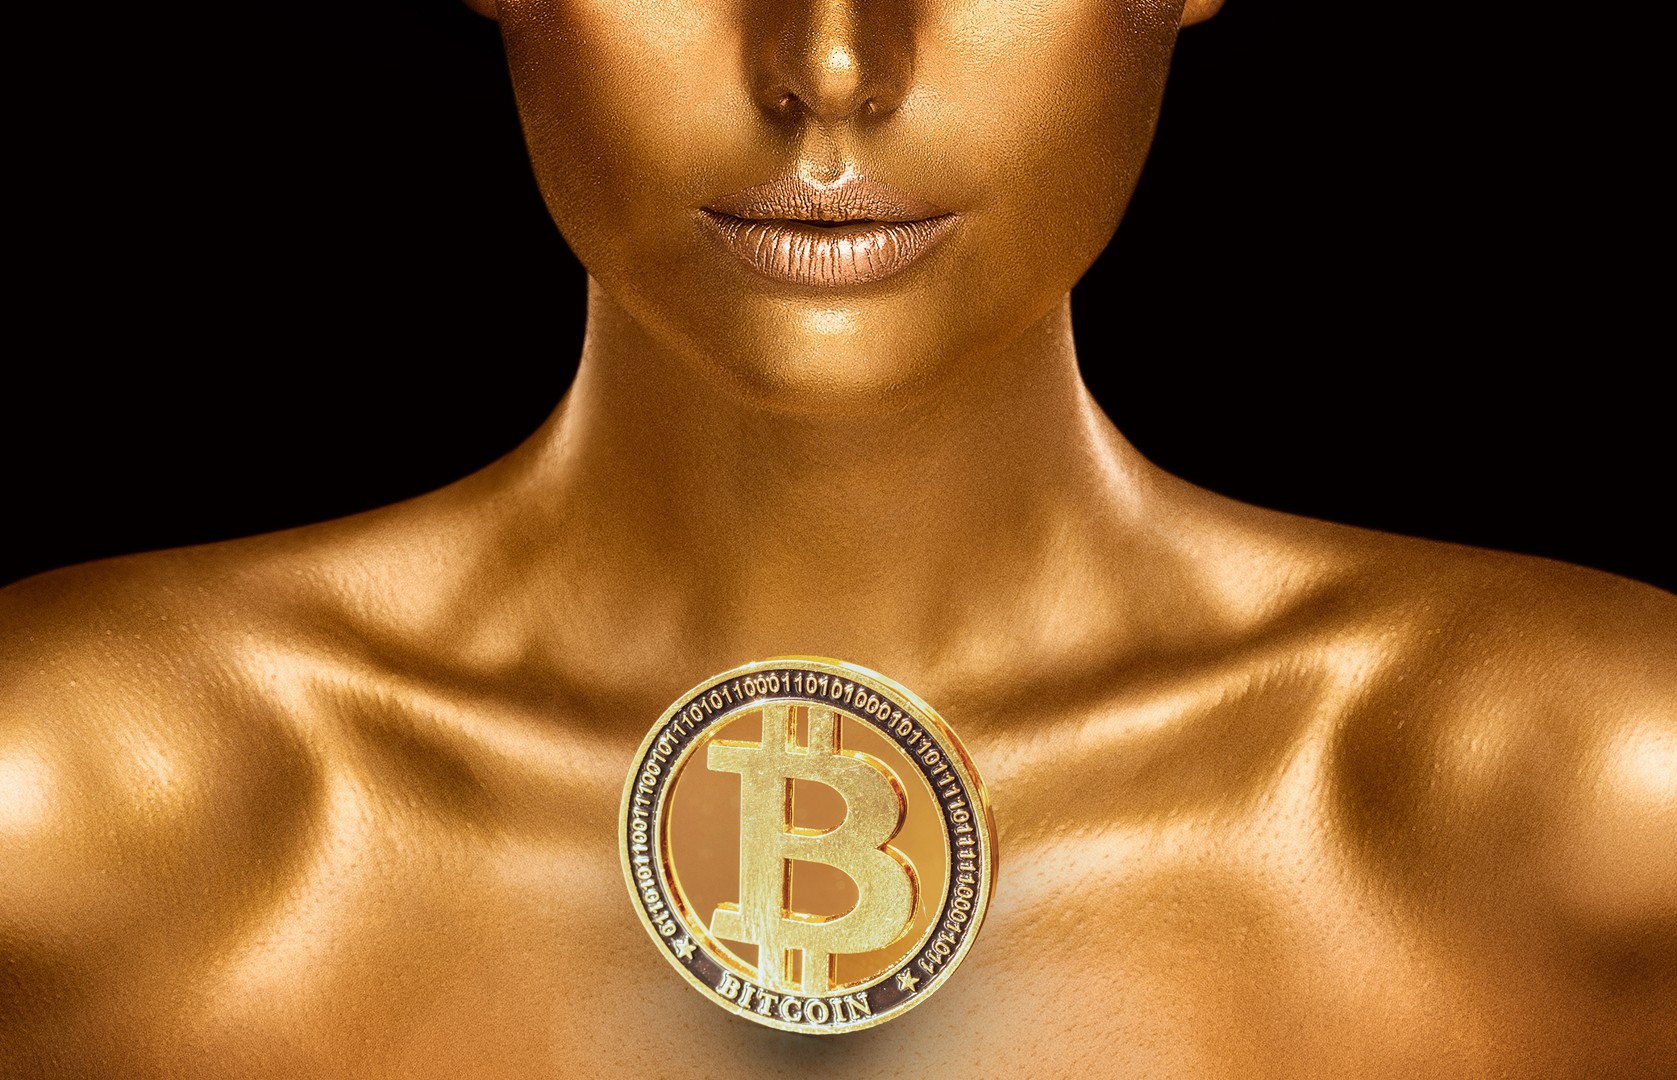 San Francisco’s Gold Club Now Accepting Bitcoin